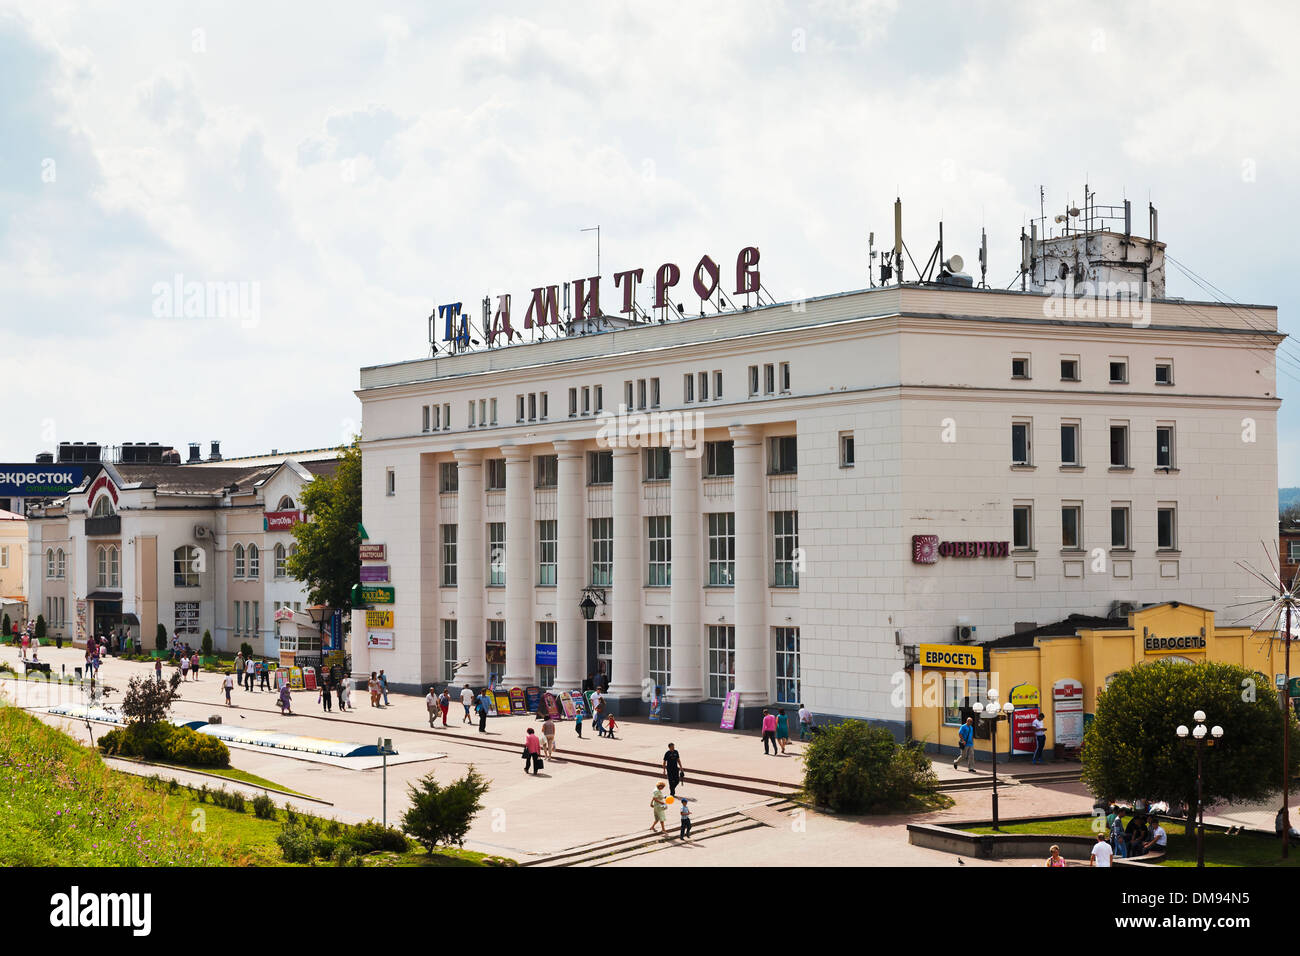 Soviet Square of Dmitrov town, Rissia Stock Photo